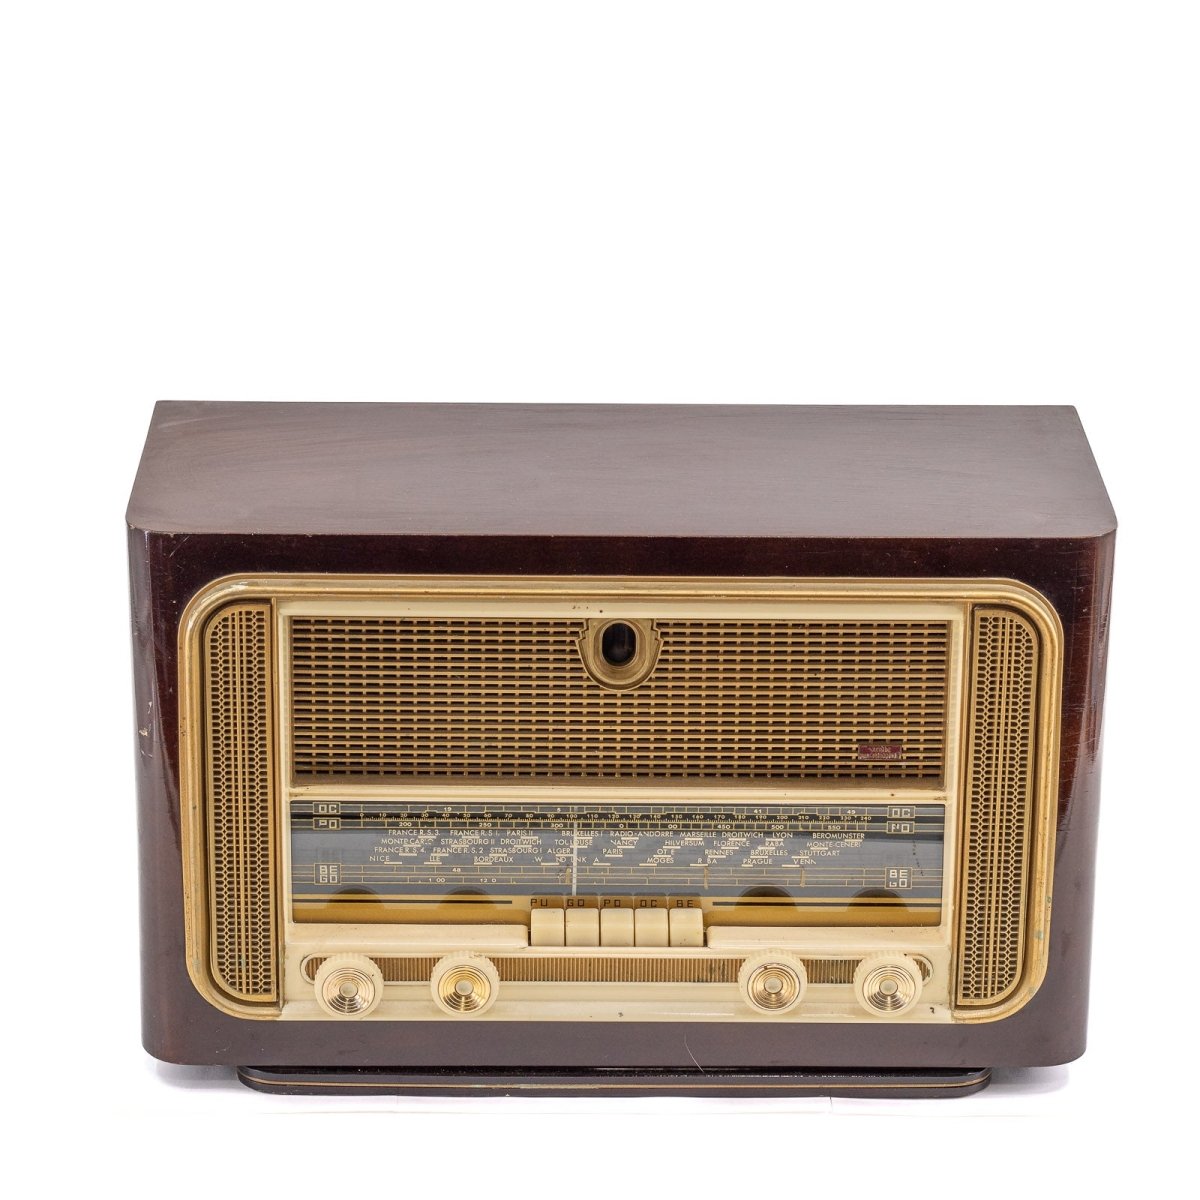 Radio Bluetooth RadioMonde Vintage 50's enceinte connectée française haut de gamme absolument prodige radio vintage